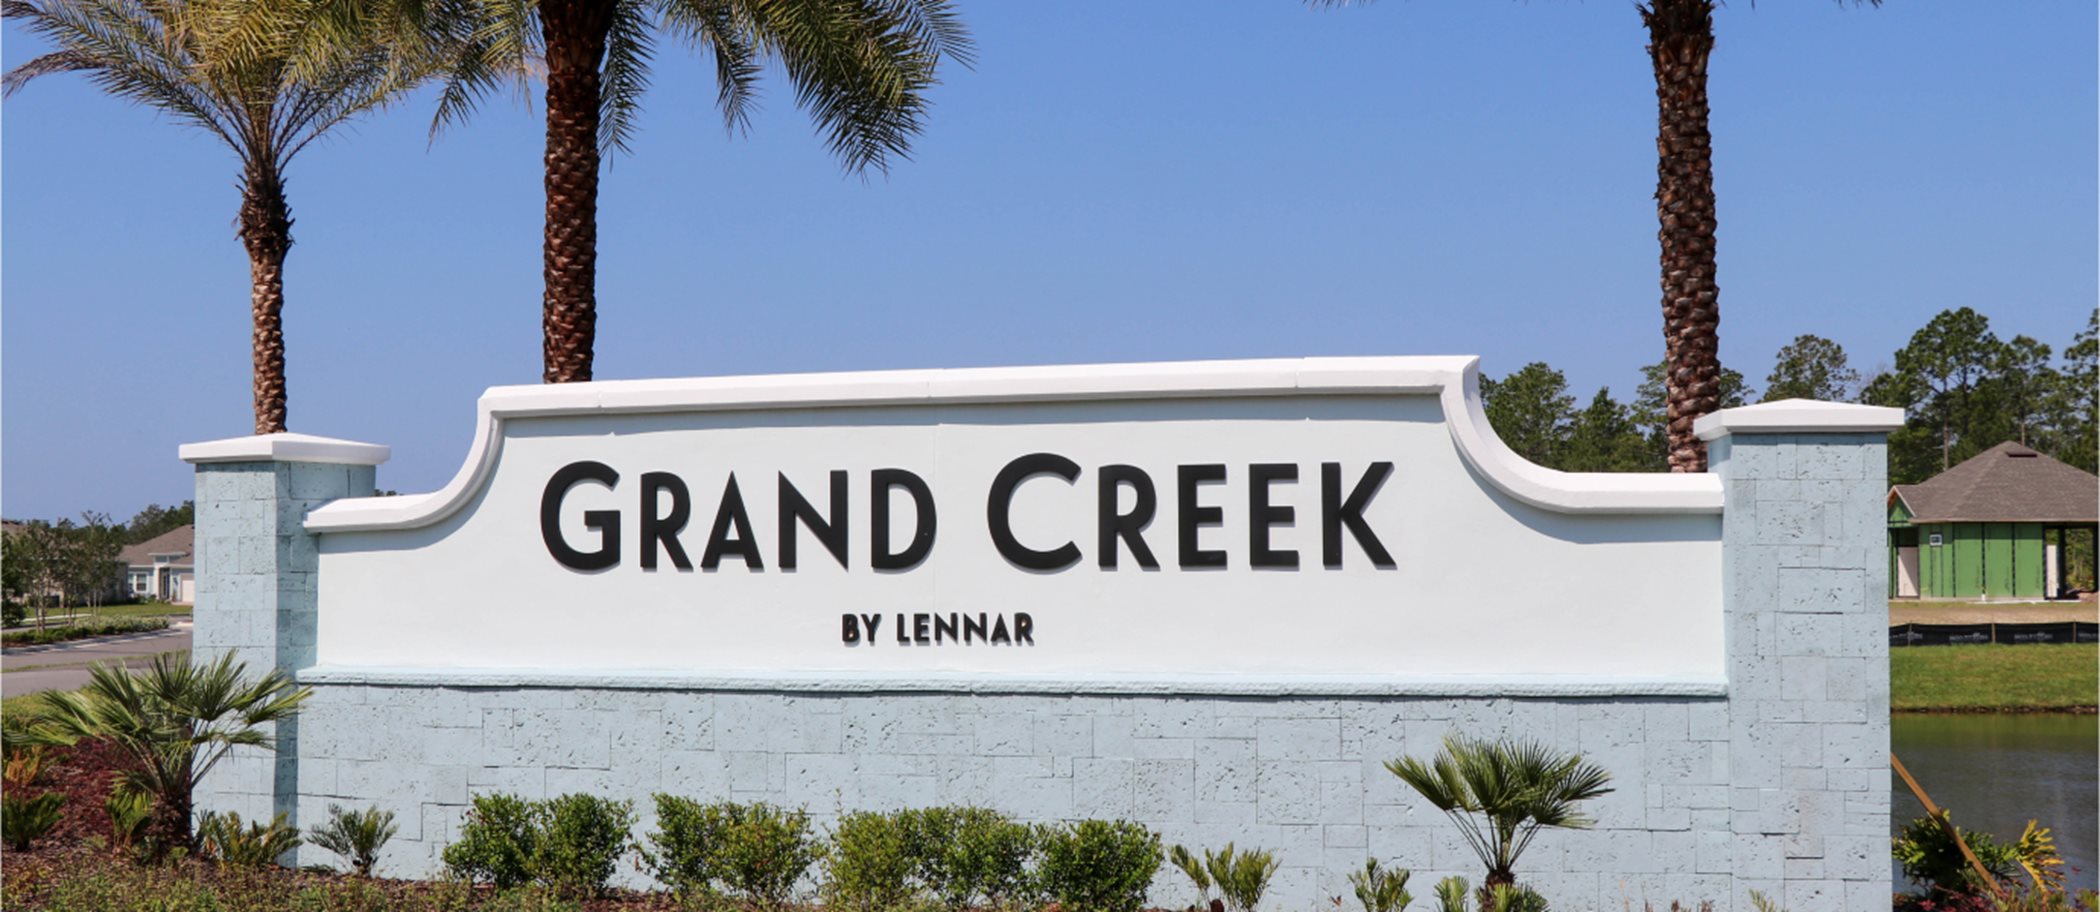 Grand Creek Entrance Monument